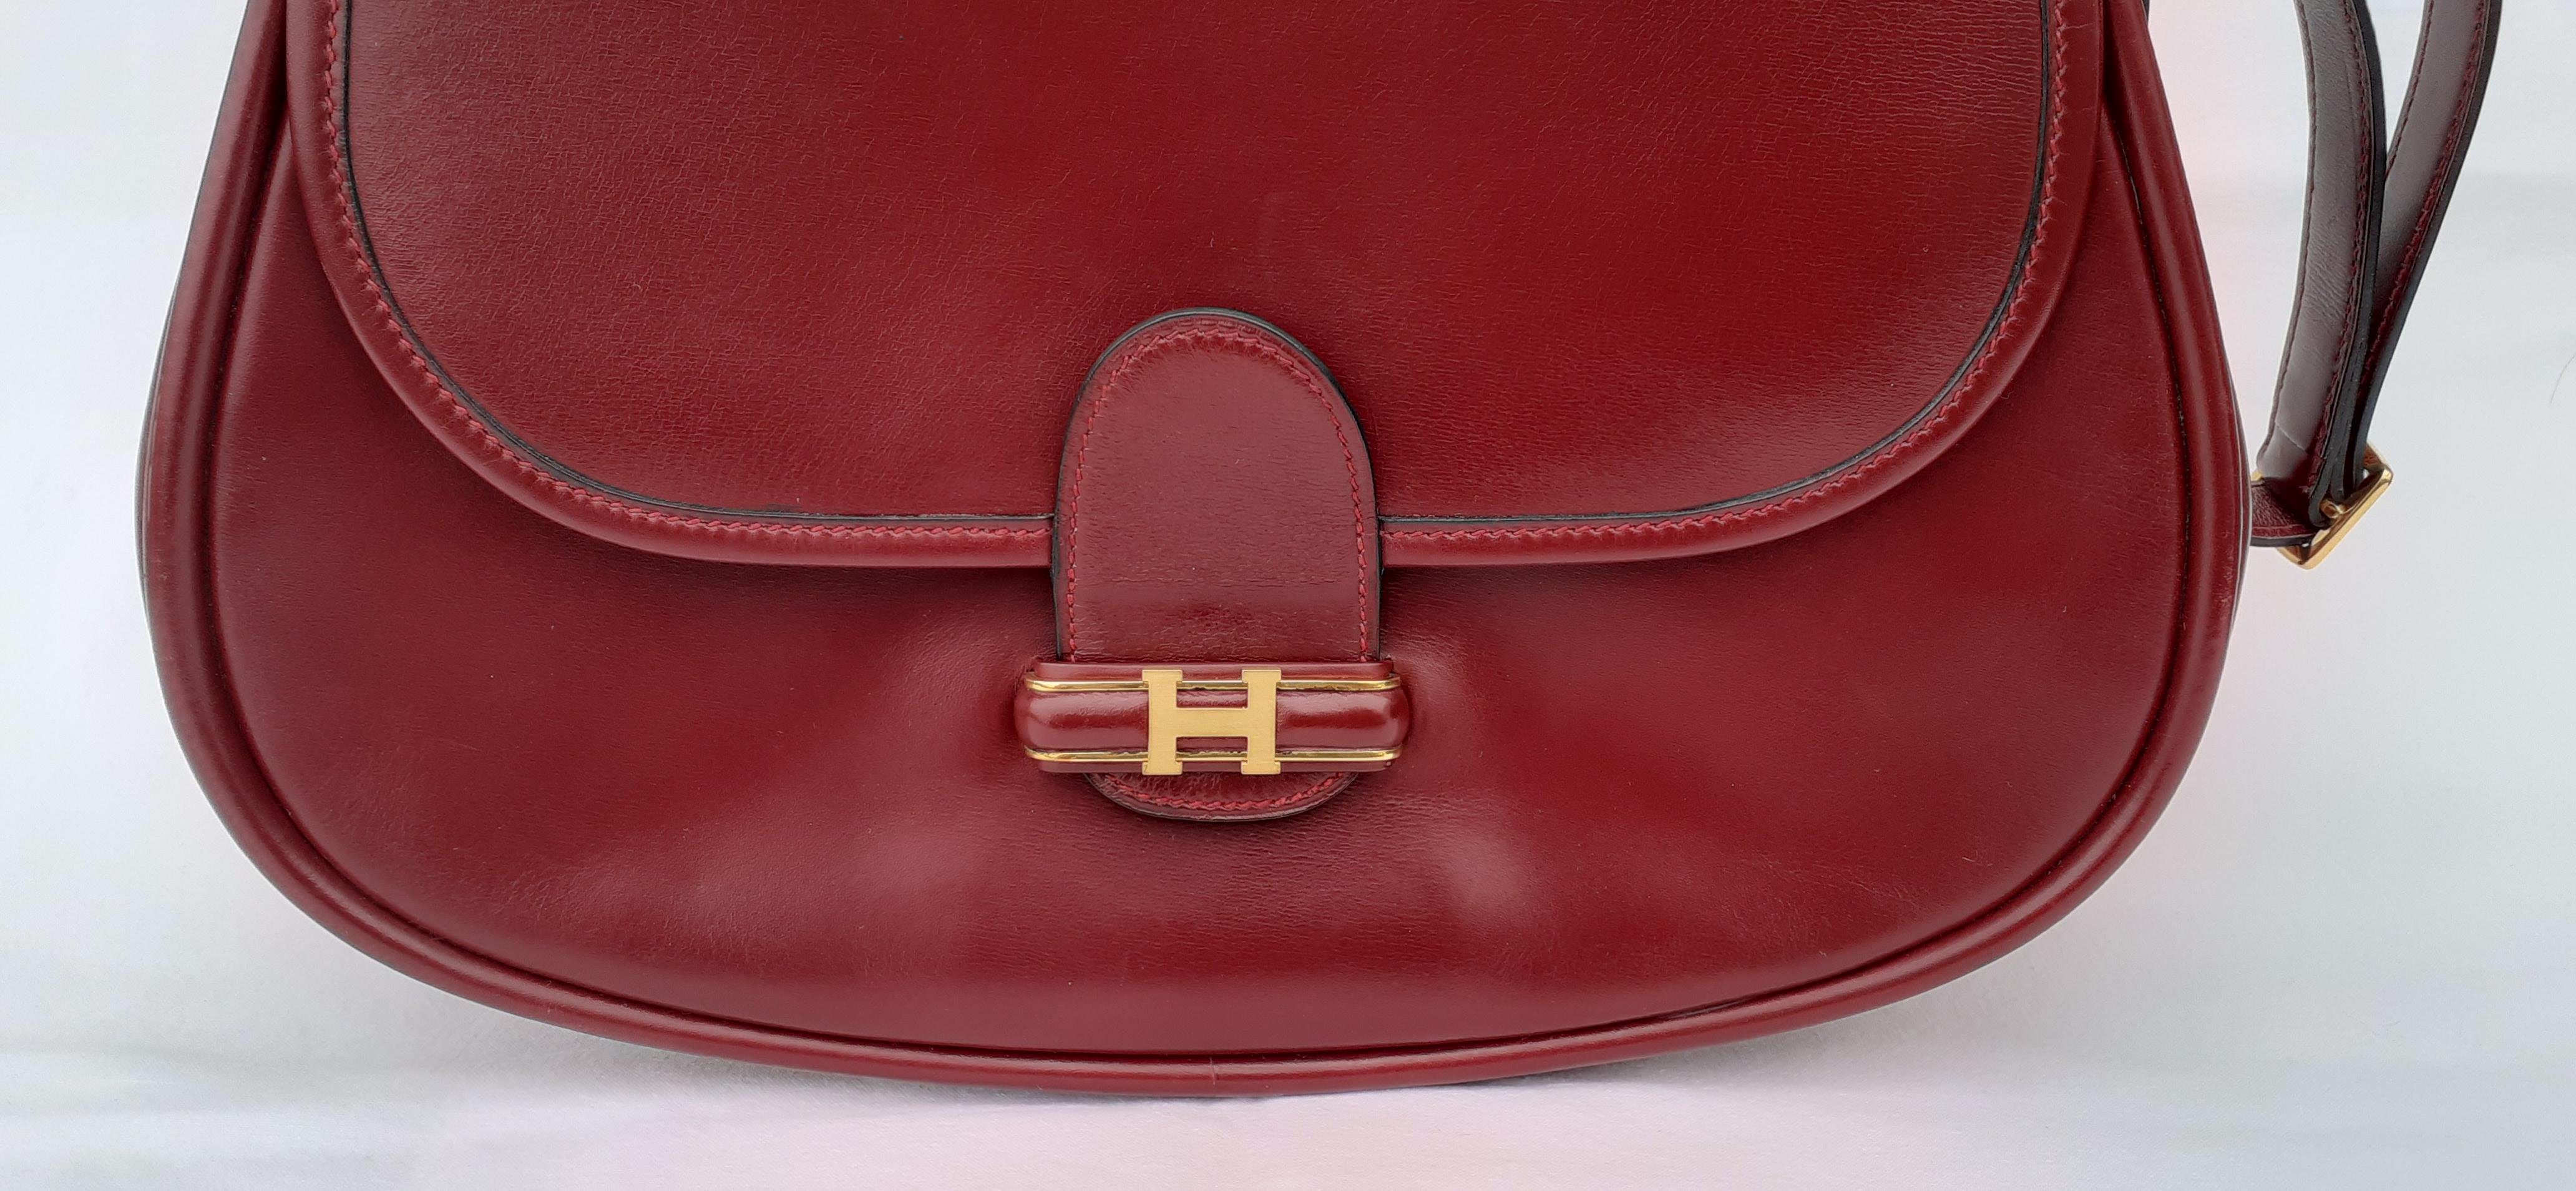 Beautiful and Rare Authentic Hermès Bag

